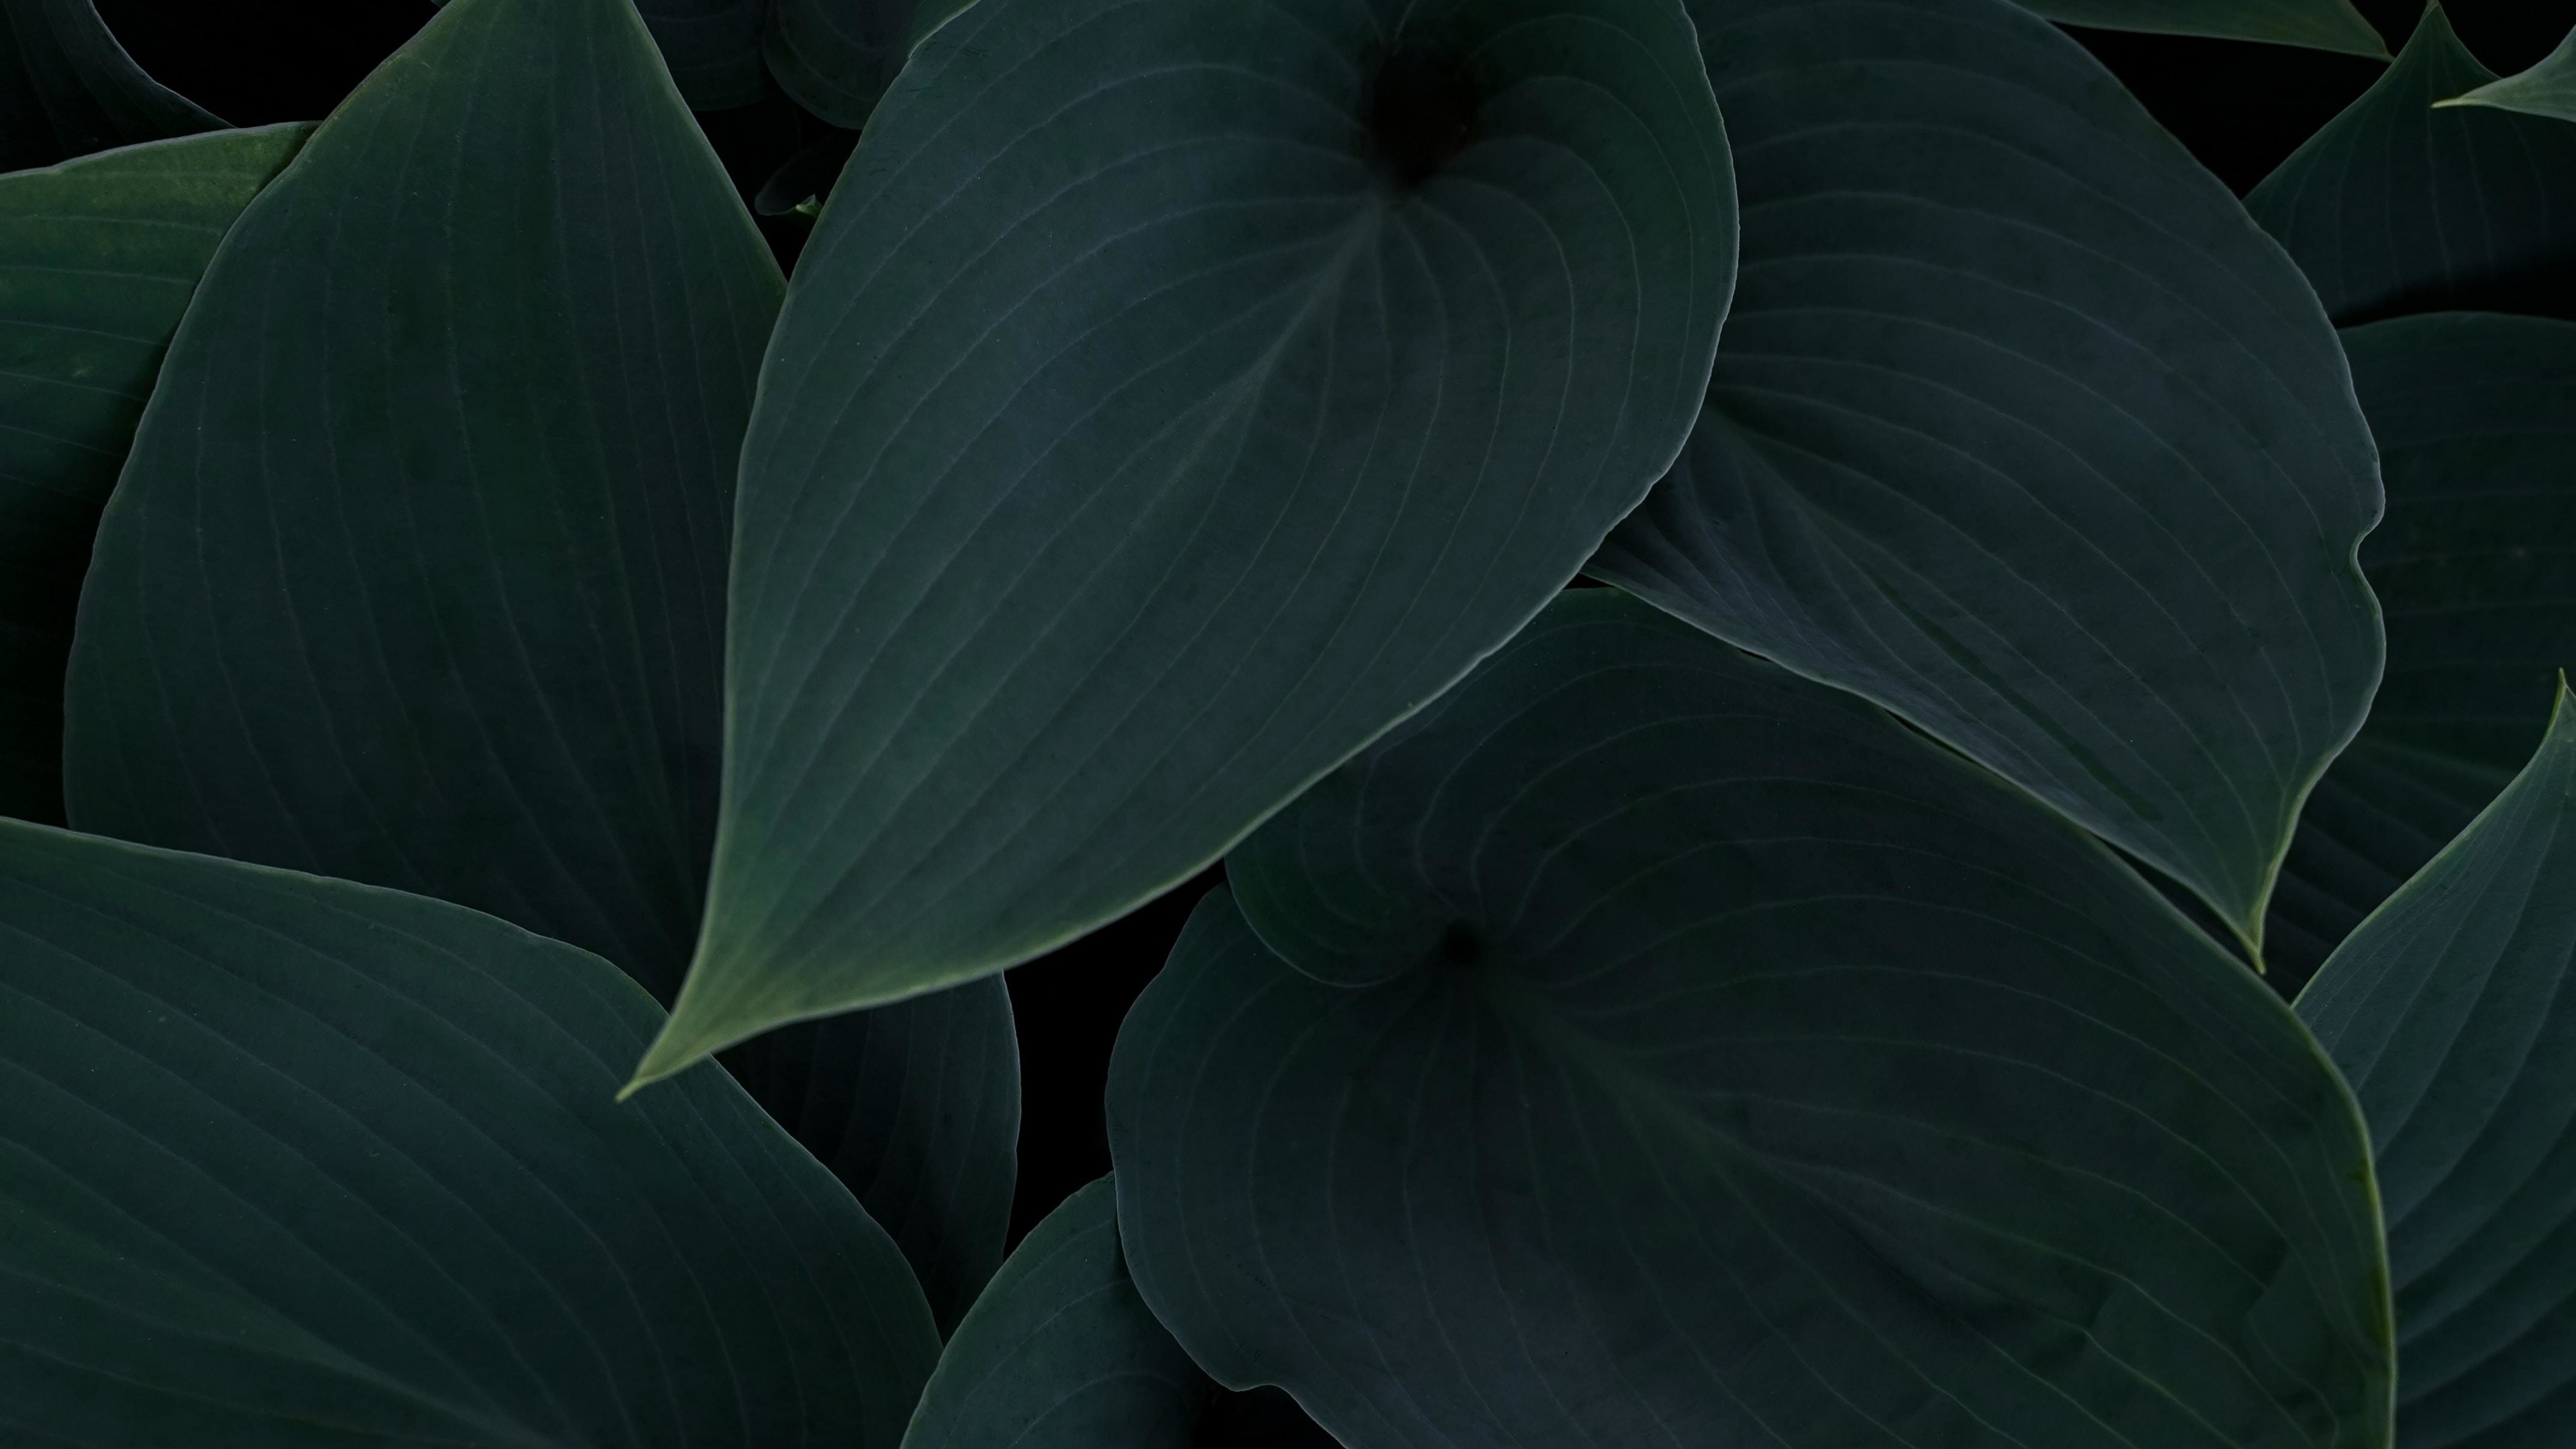 Download wallpaper 3840x2160 plant, green-dark leaves, close up 4k wallpaper,  uhd wallpaper, 16:9 widescreen 3840x2160 hd background, 27190